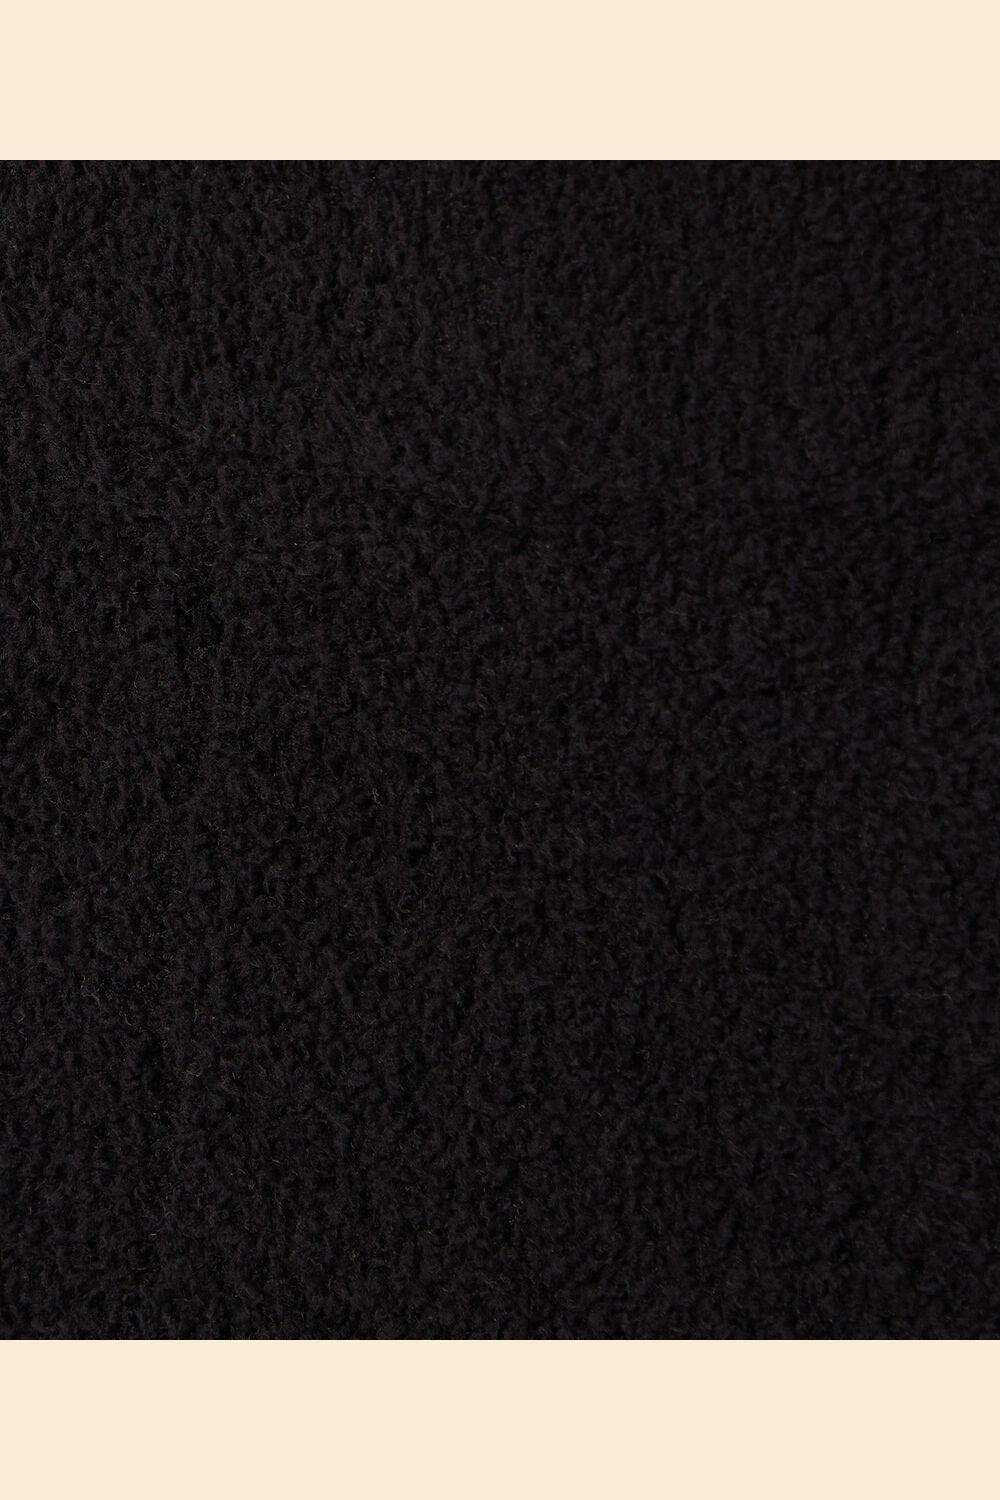 ETAM - מכנסי פיג'מה BIJAN בצבע שחור - MASHBIR//365